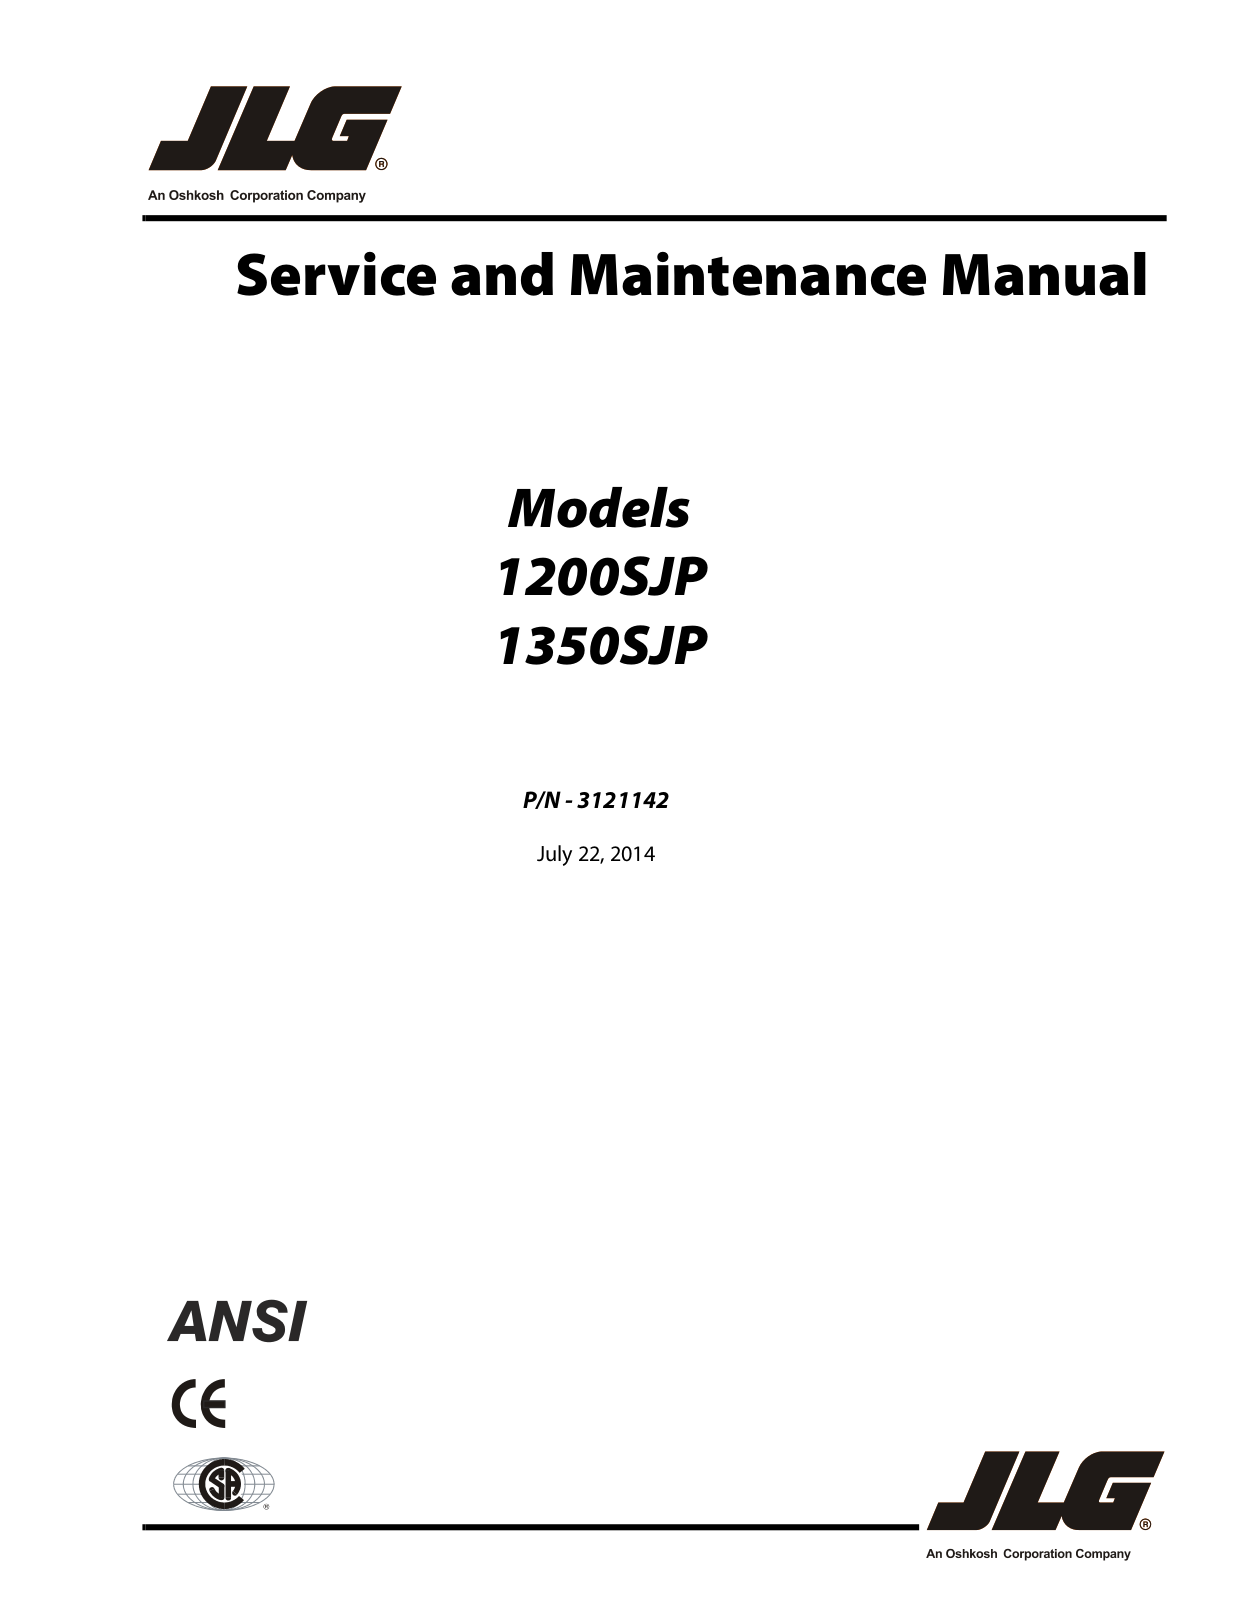 JLG 1350SJP Service Manual